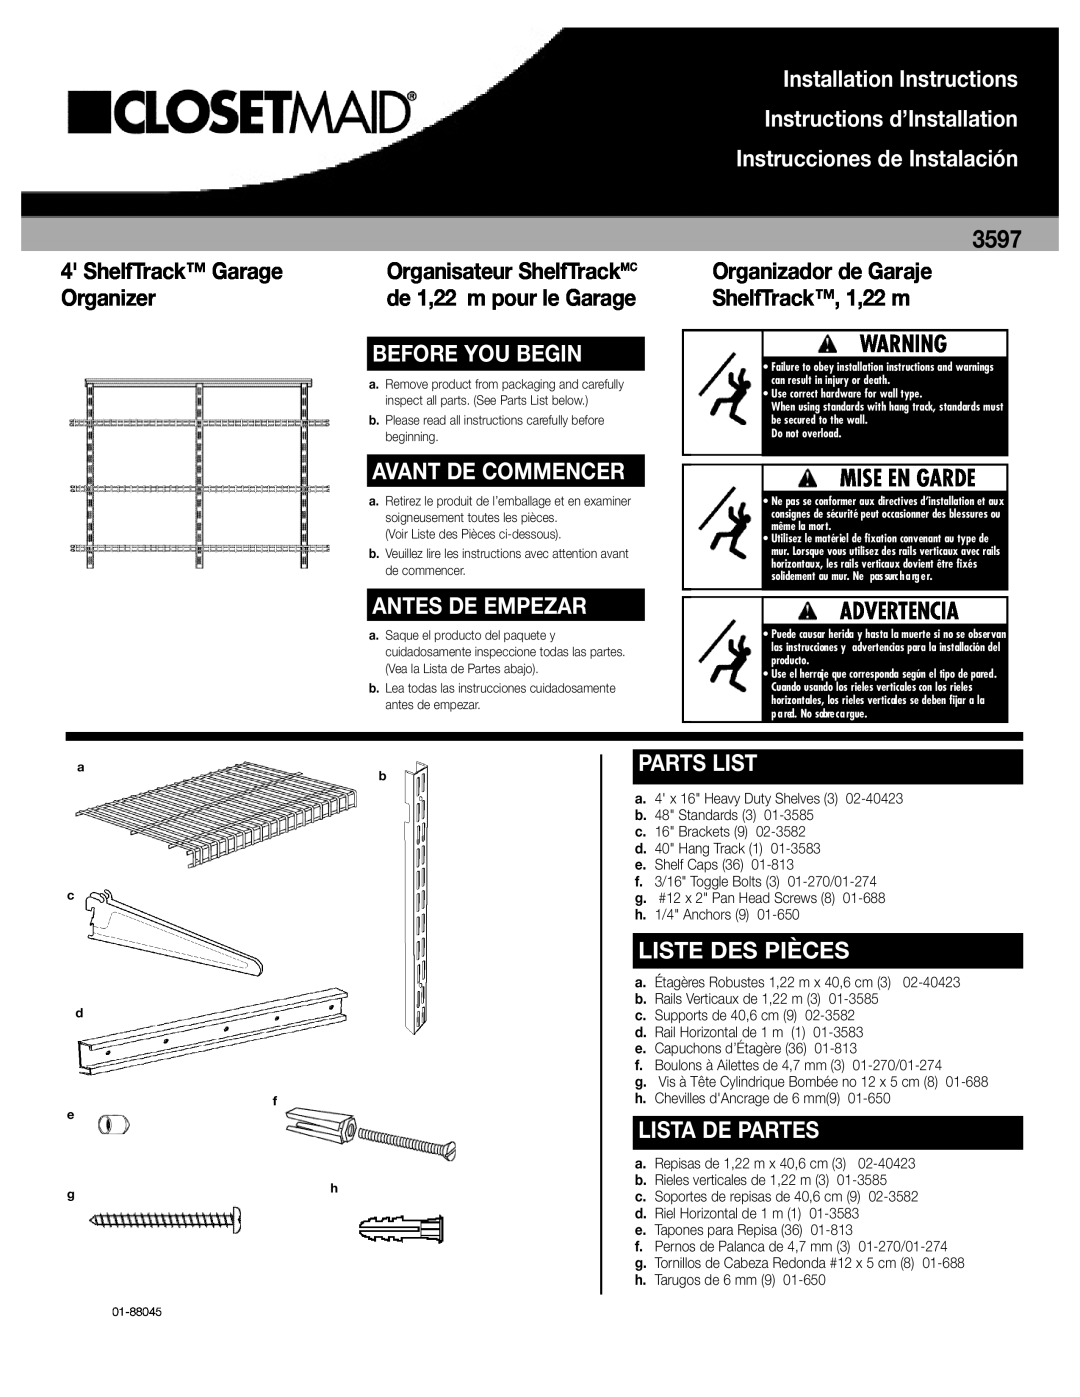 Closet Maid 3597 installation instructions Installation Instructions, Instructions d’Installation, ShelfTrack Garage 